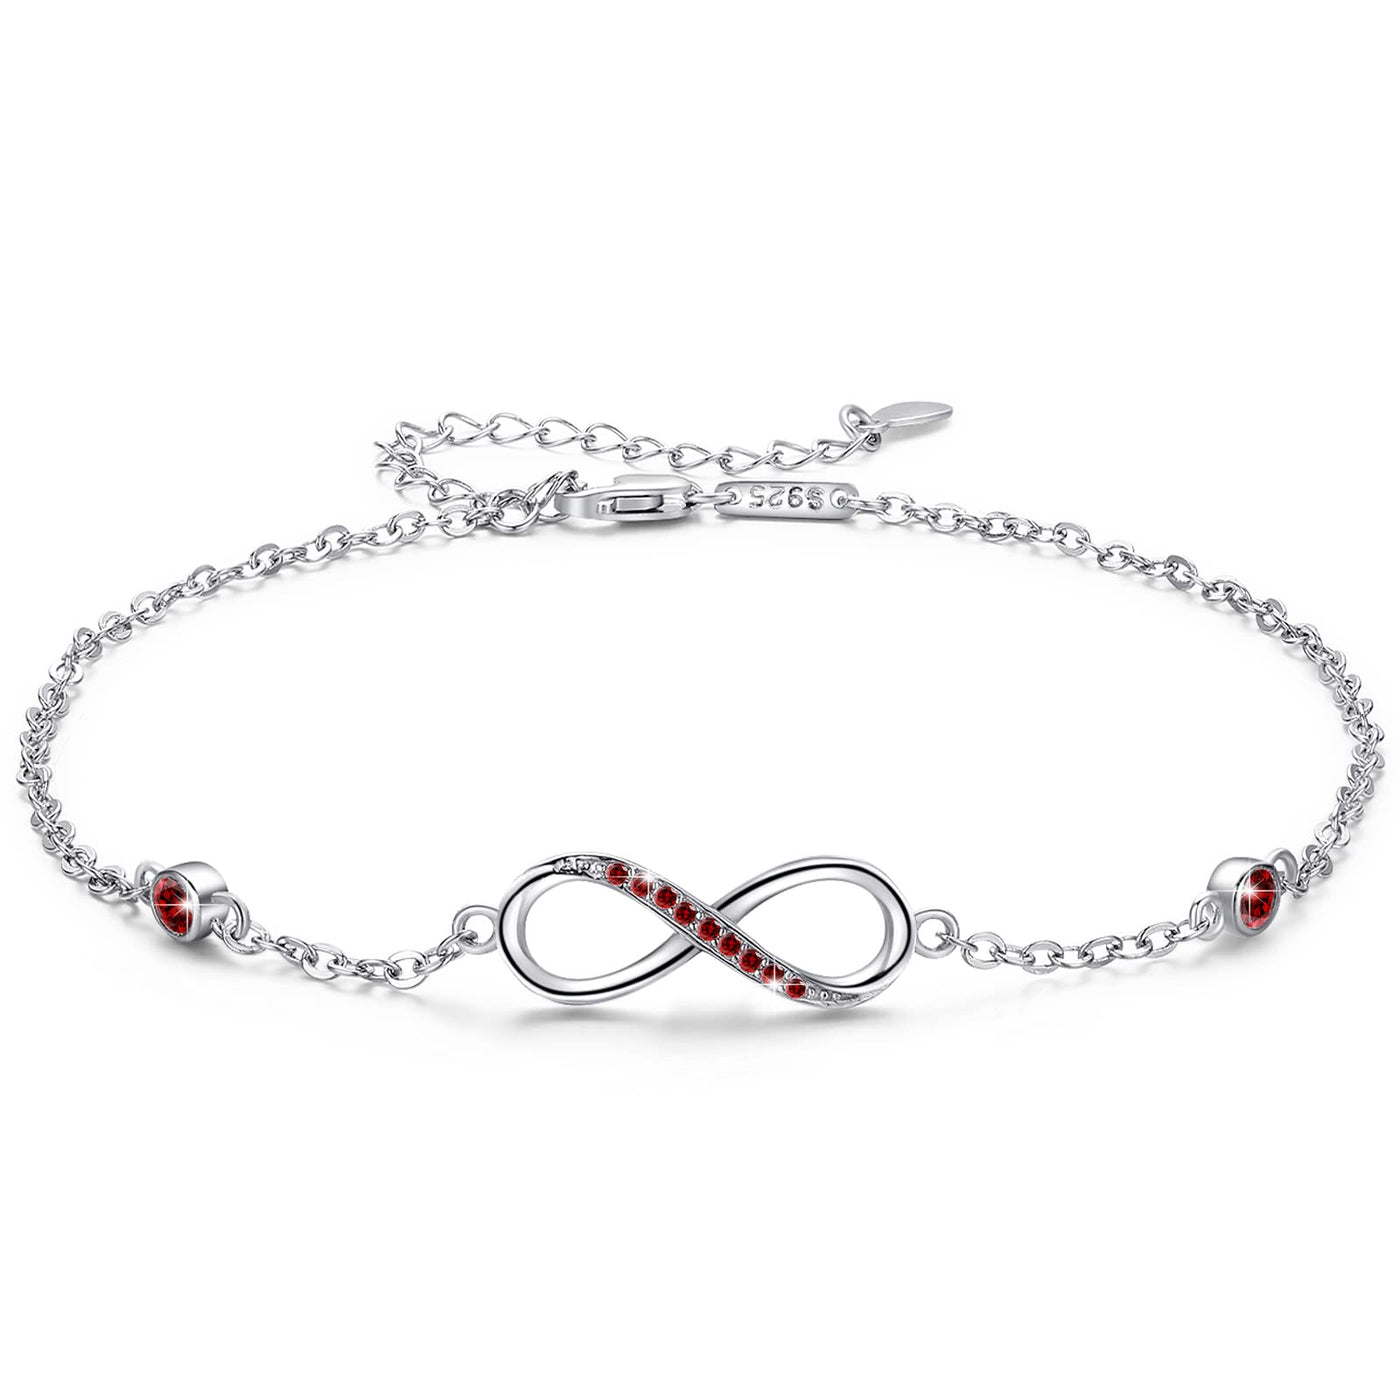 Sterling Silver Endless Love Symbol Anklet Charm Adjustable Chain Anklets For Women